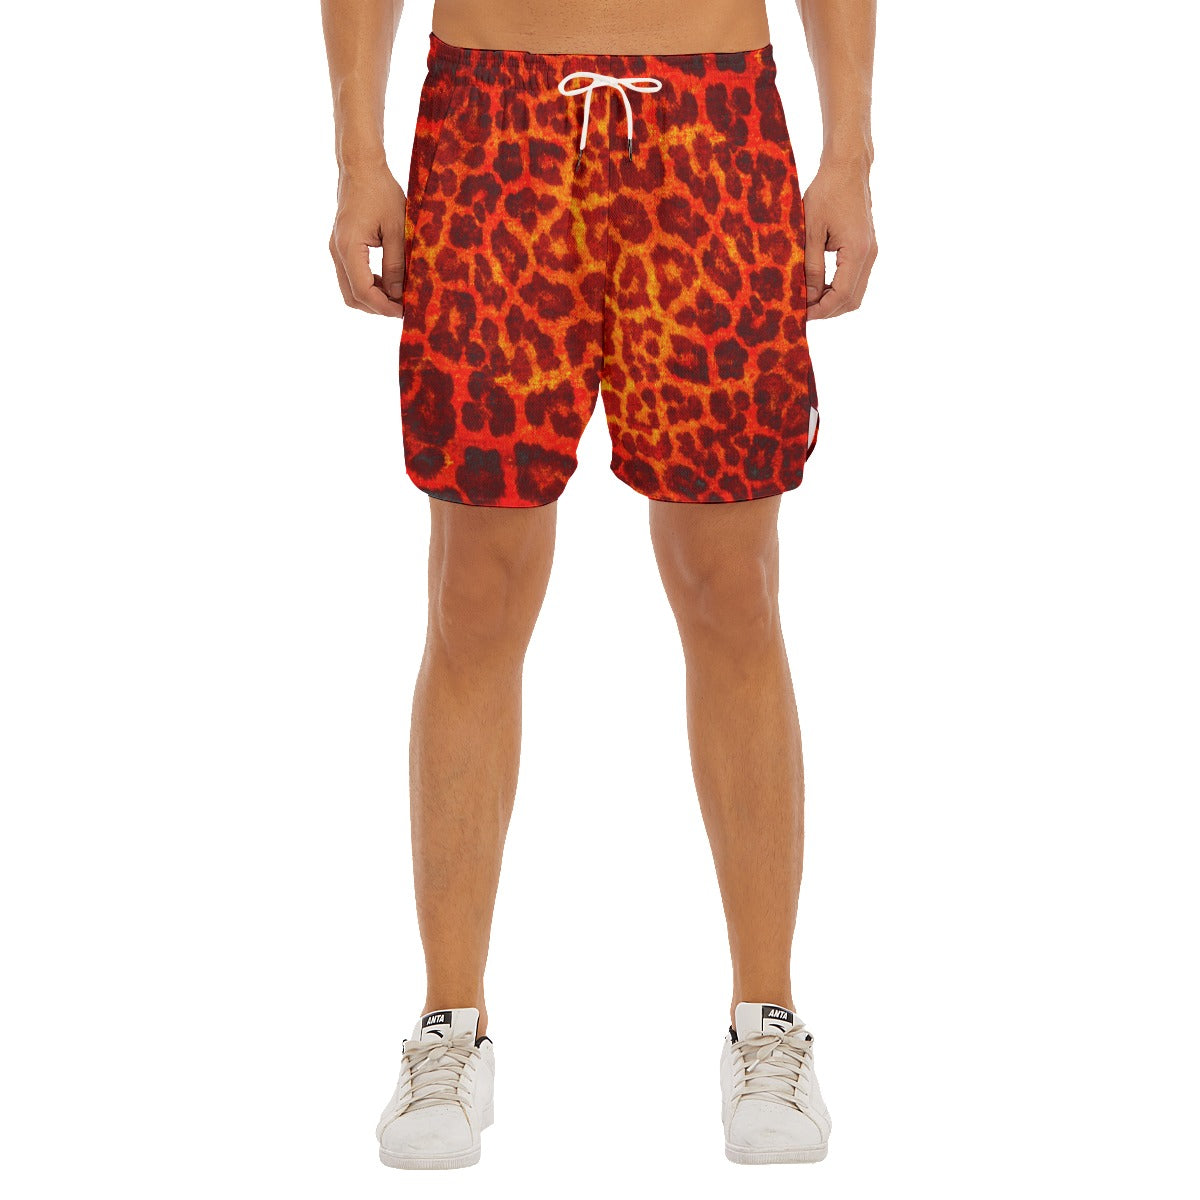 Metal Cheetah Dudes Drawstring Chill Gym Shorts